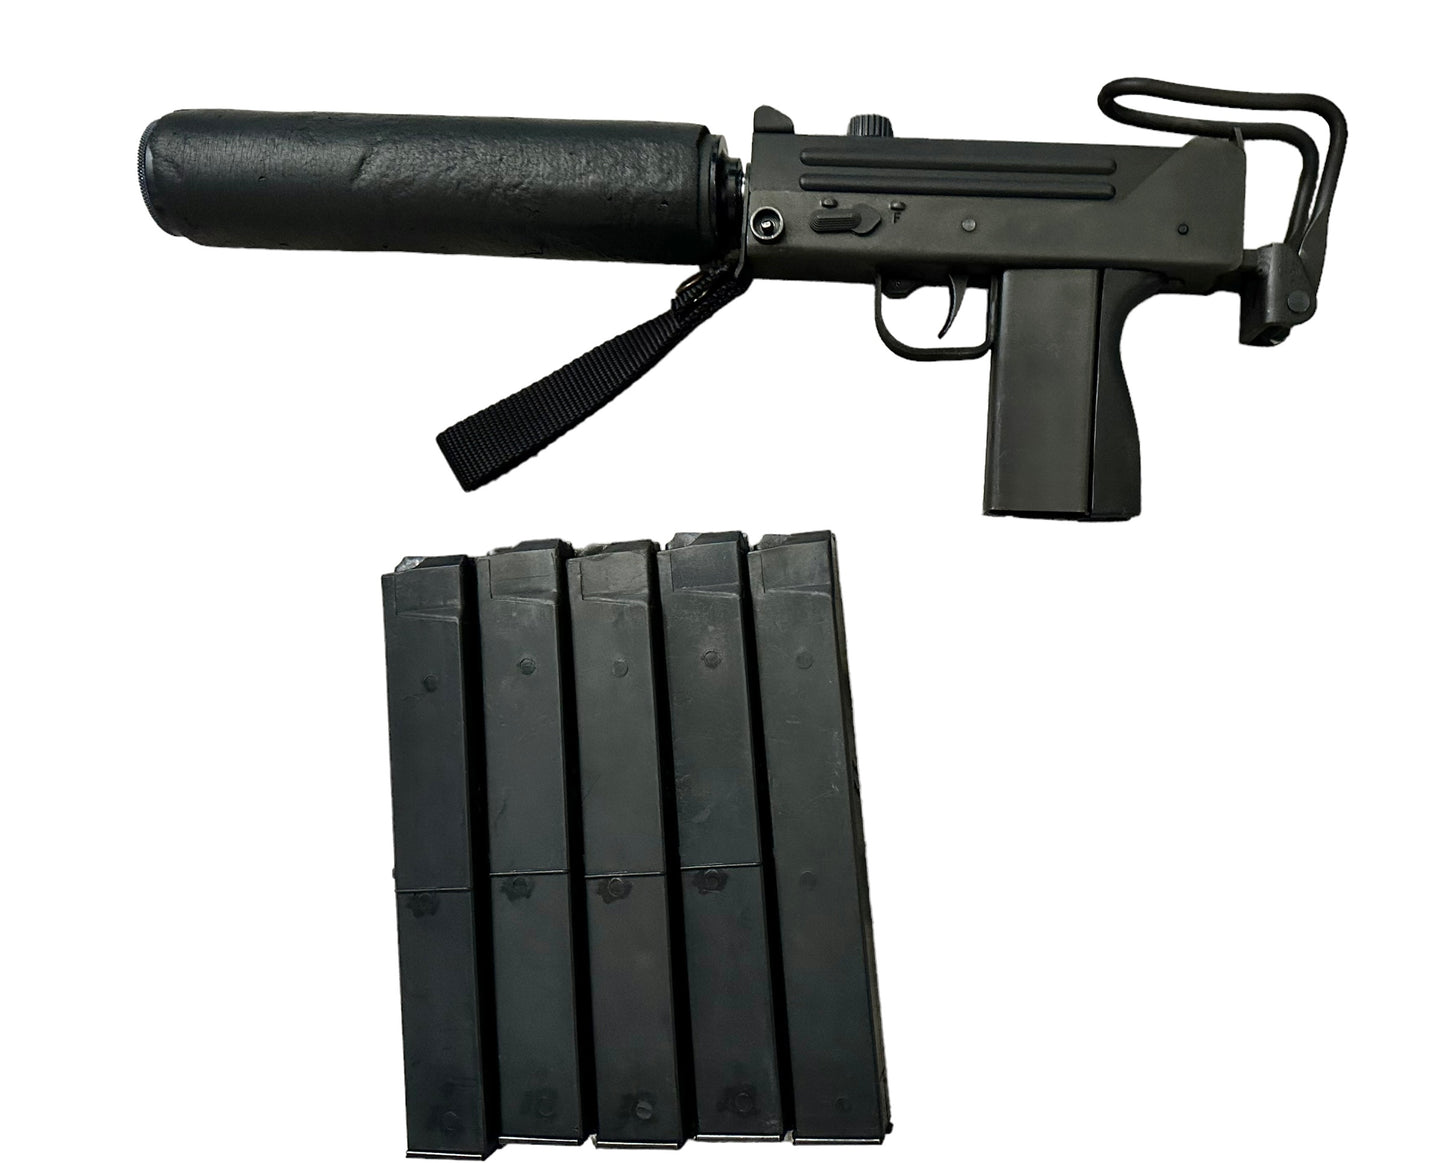 SWD COBRAY M11A1 .380 LARGE MAGWELL TRANSFERABLE FULL AUTO MACHINE GUN